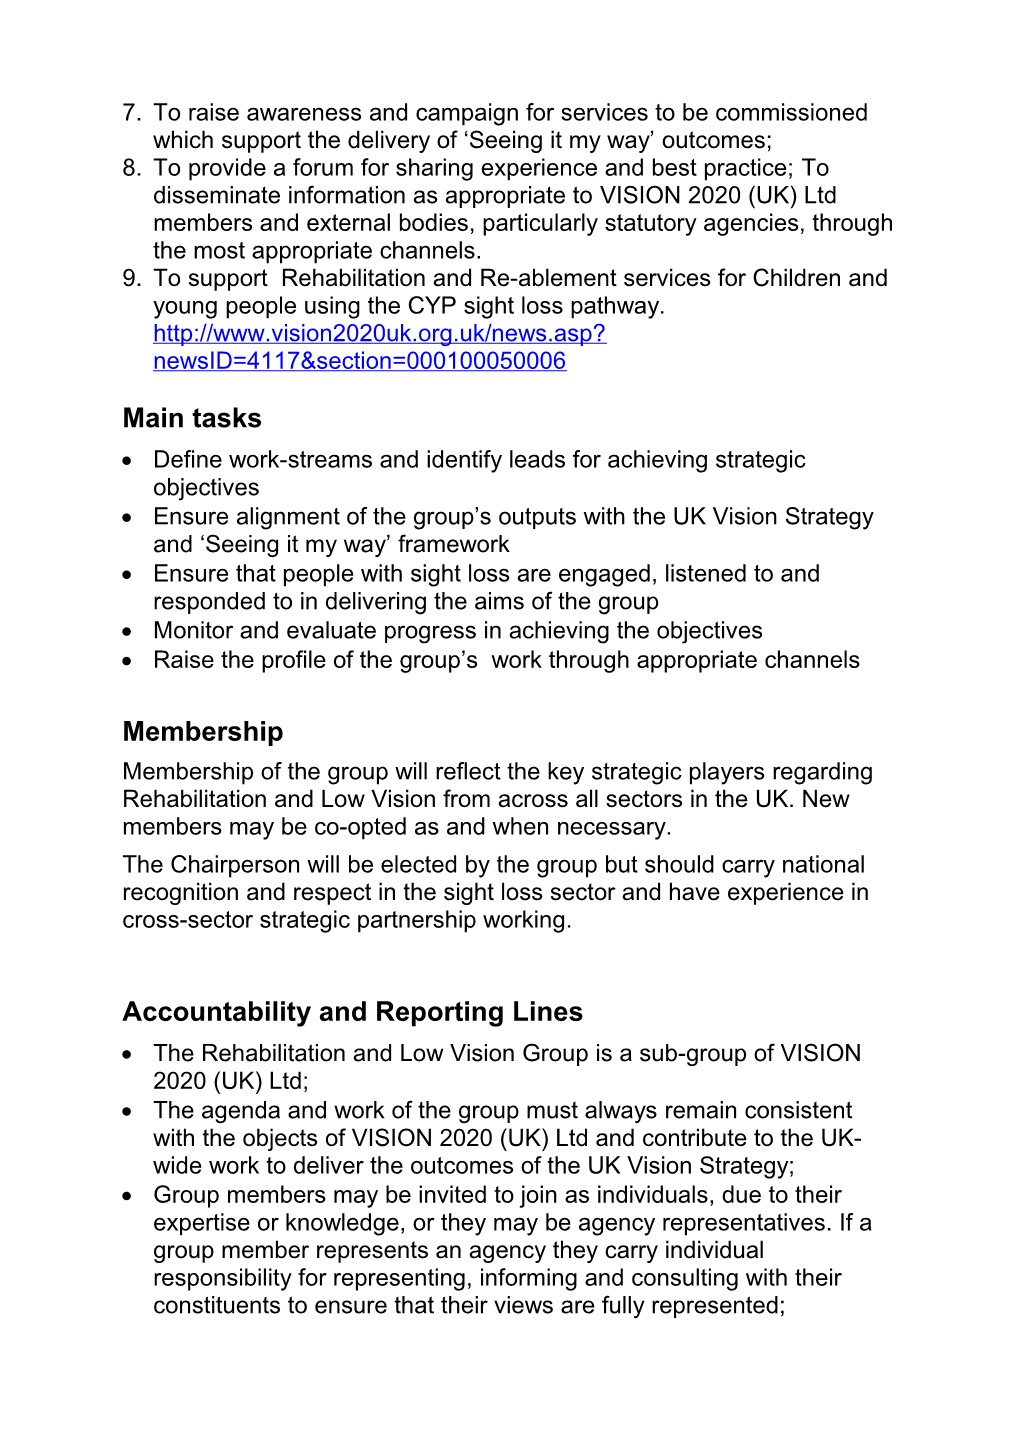 The UK Vision Strategy Advisory Group